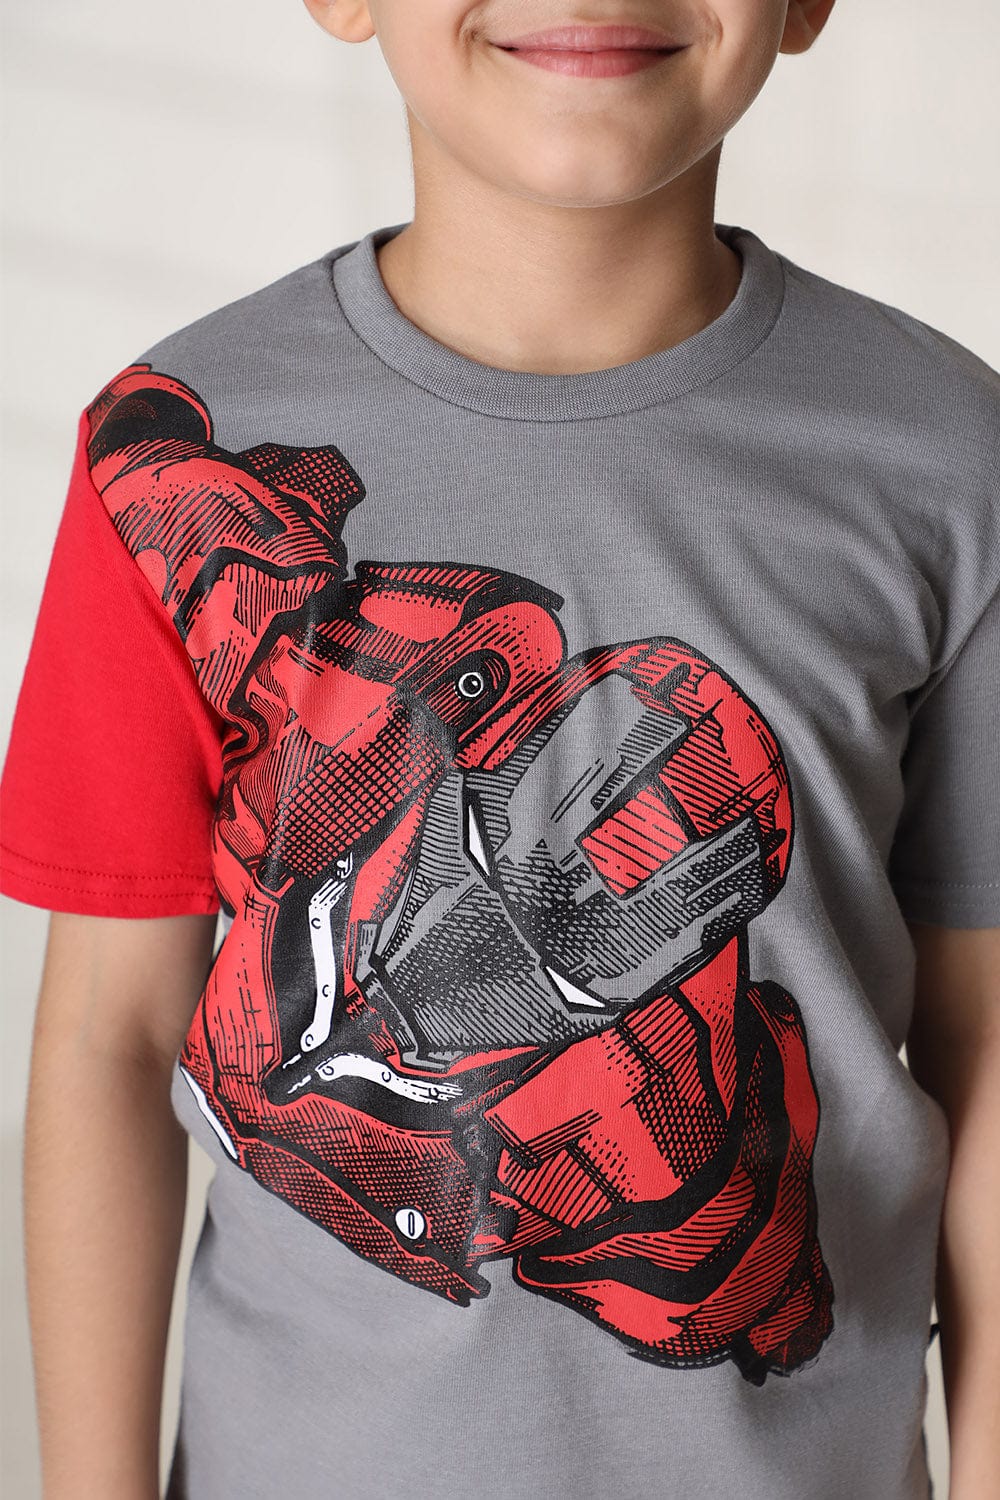 Hope Not Out by Shahid Afridi Boys Knit T-Shirt Boys Grey Iron Man T-Shirt